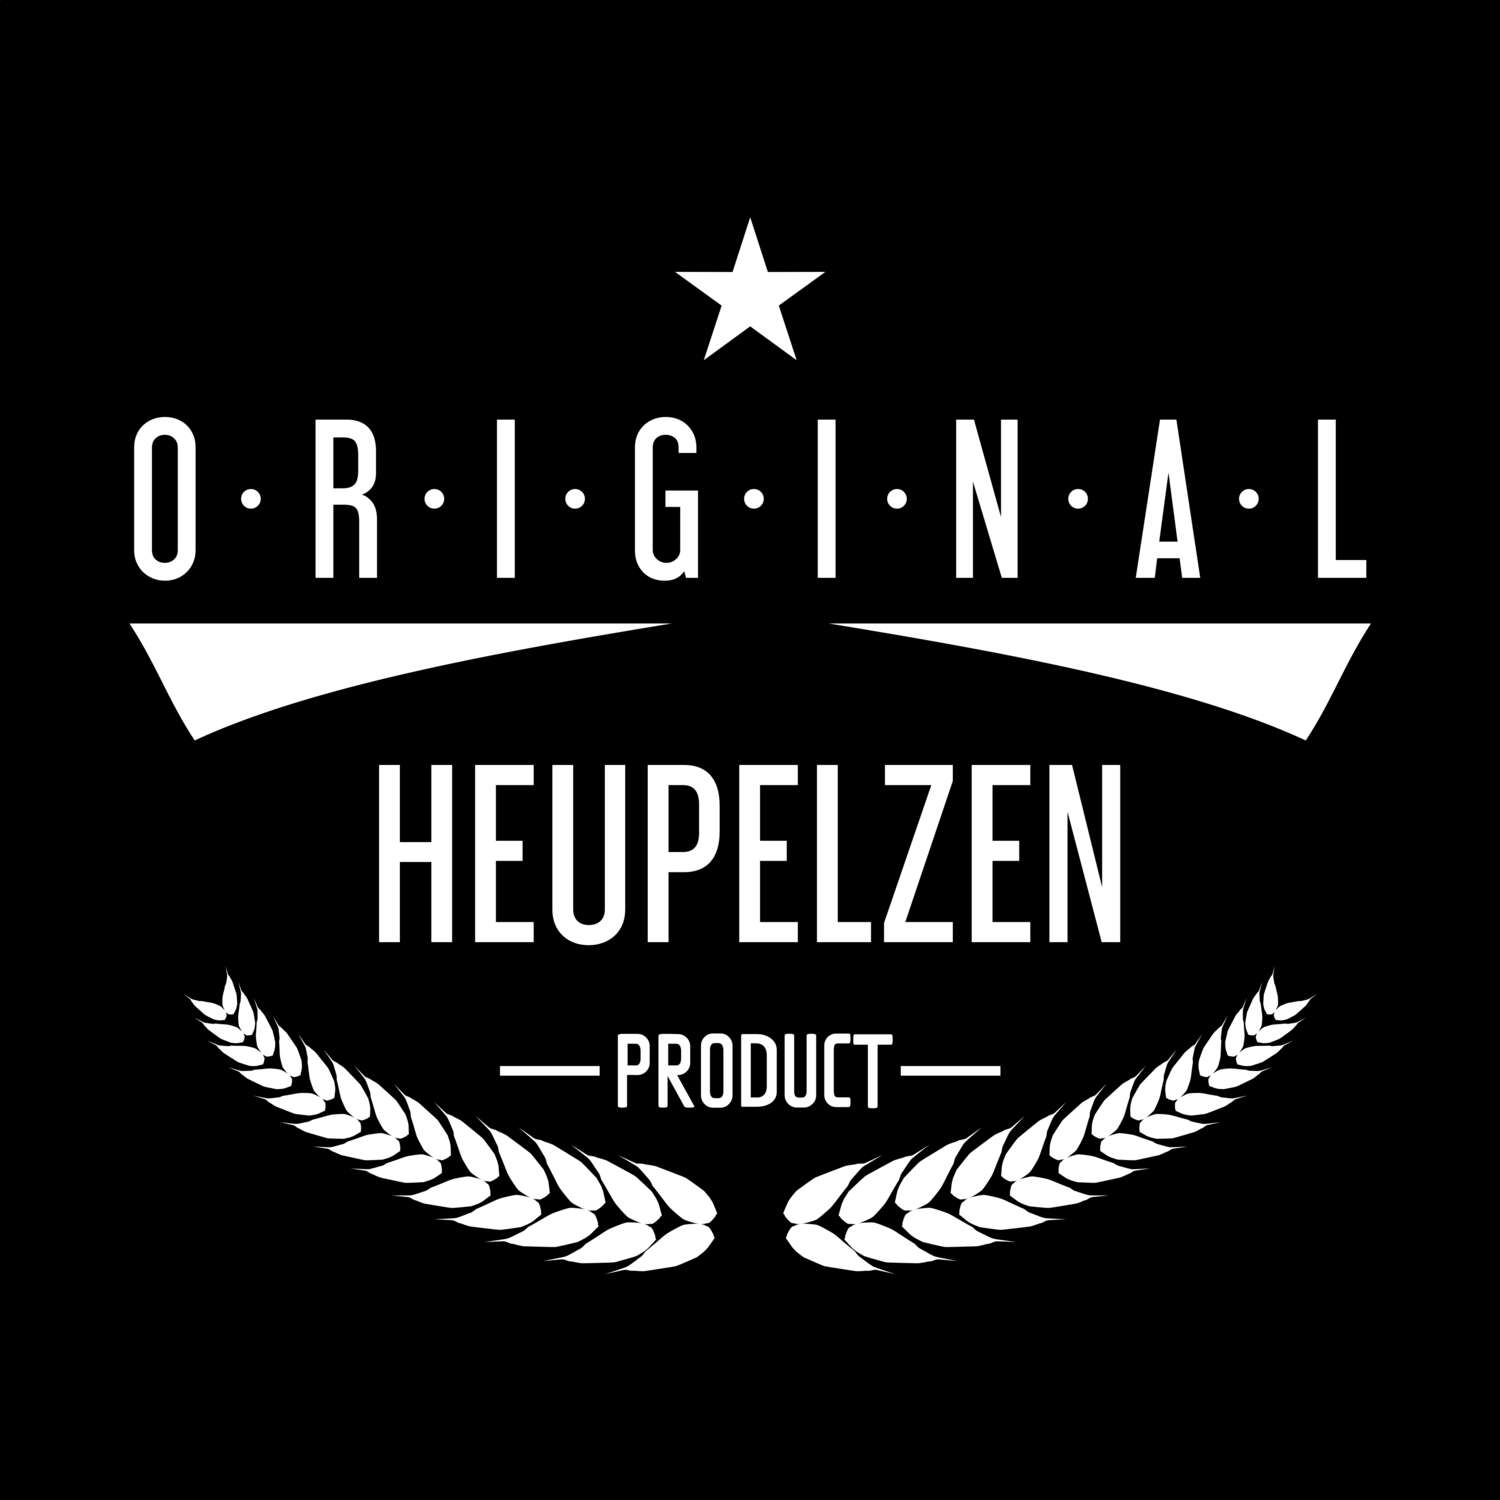 Heupelzen T-Shirt »Original Product«